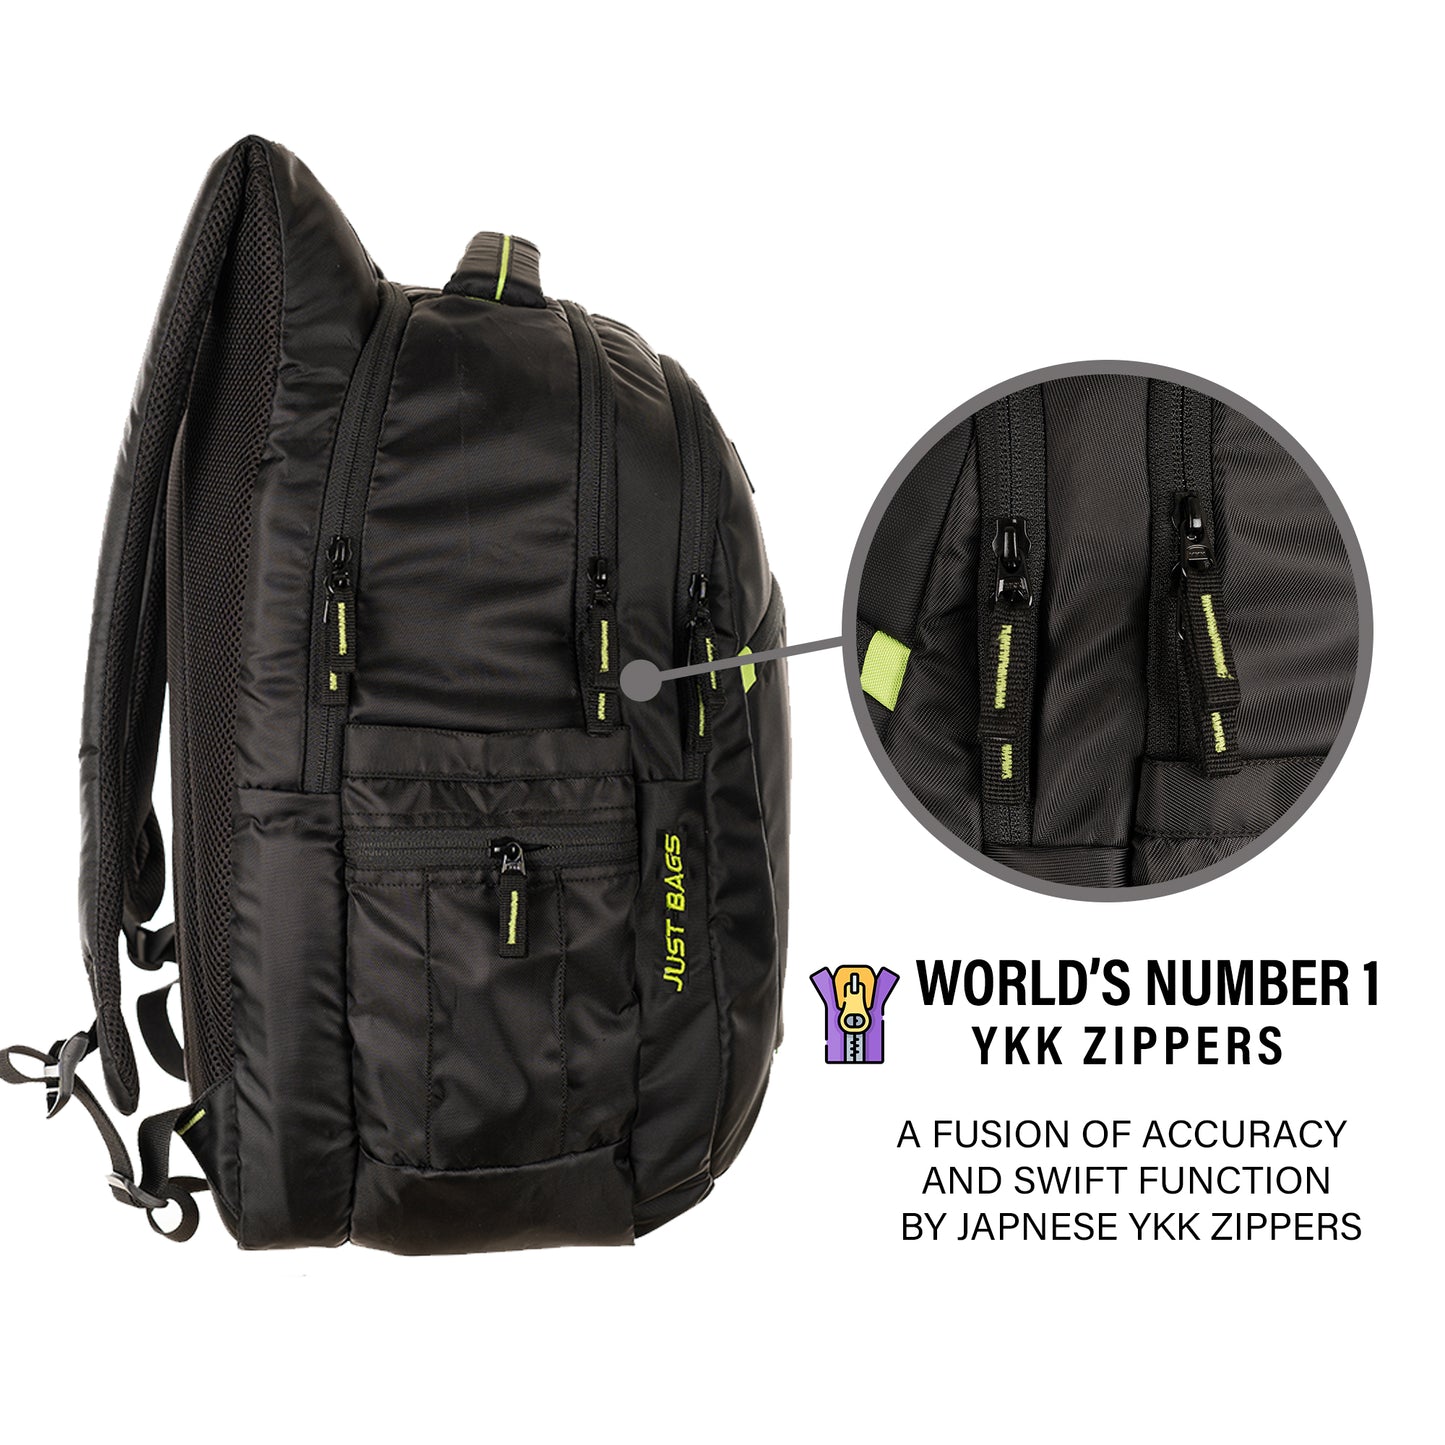 Space Pro Unisex Laptop Backpack (Black Green)